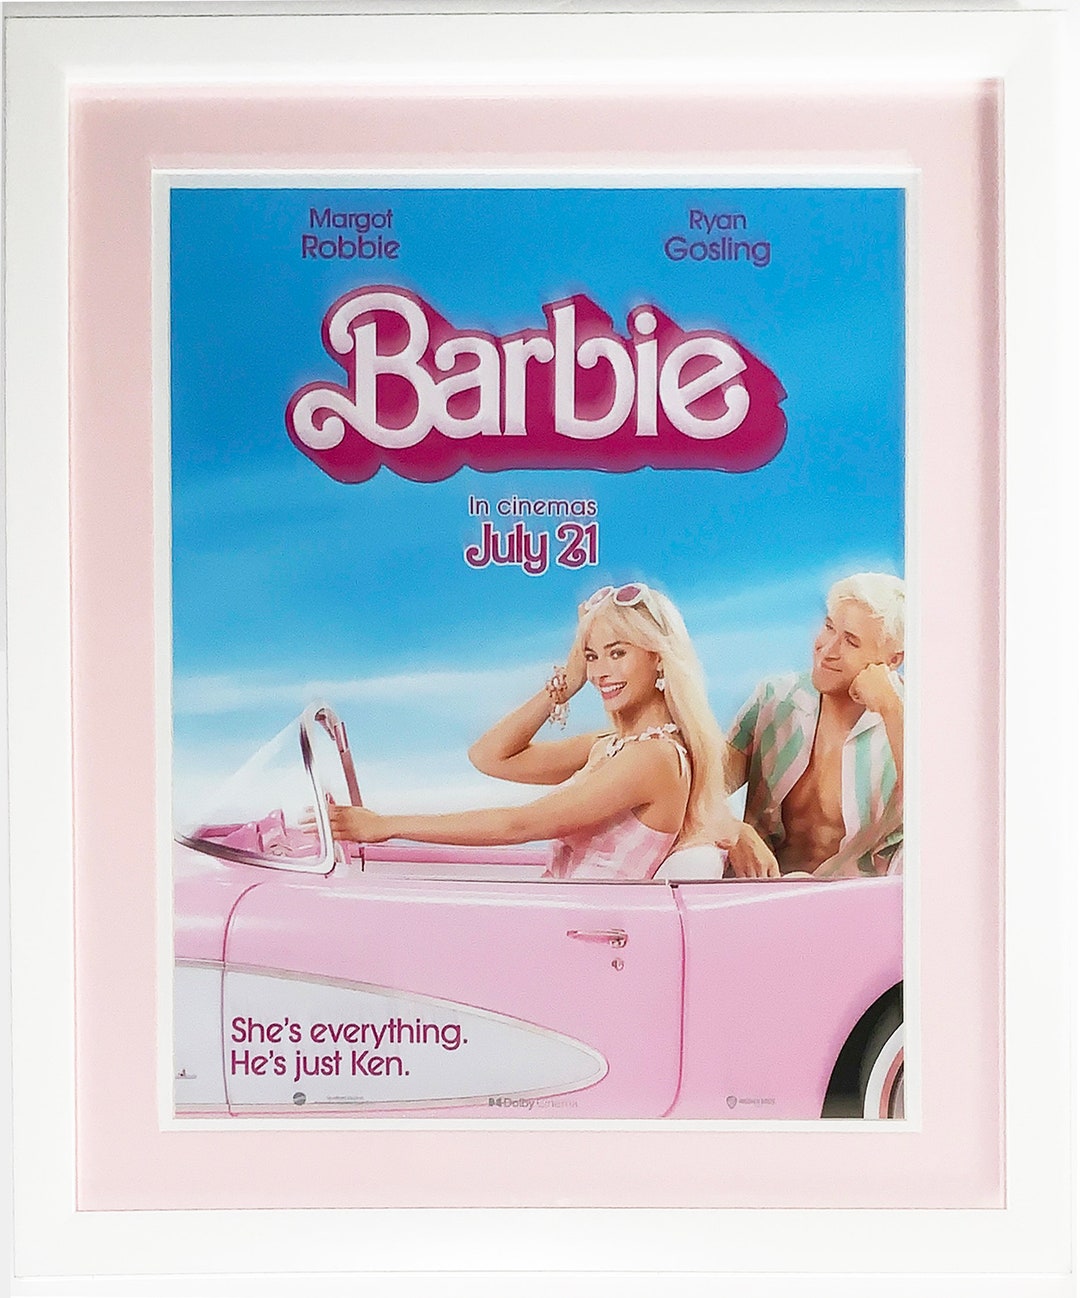 RYAN GOSLING BARBIE KEN MOVIE 8x10 PROMO PHOTO Iconic